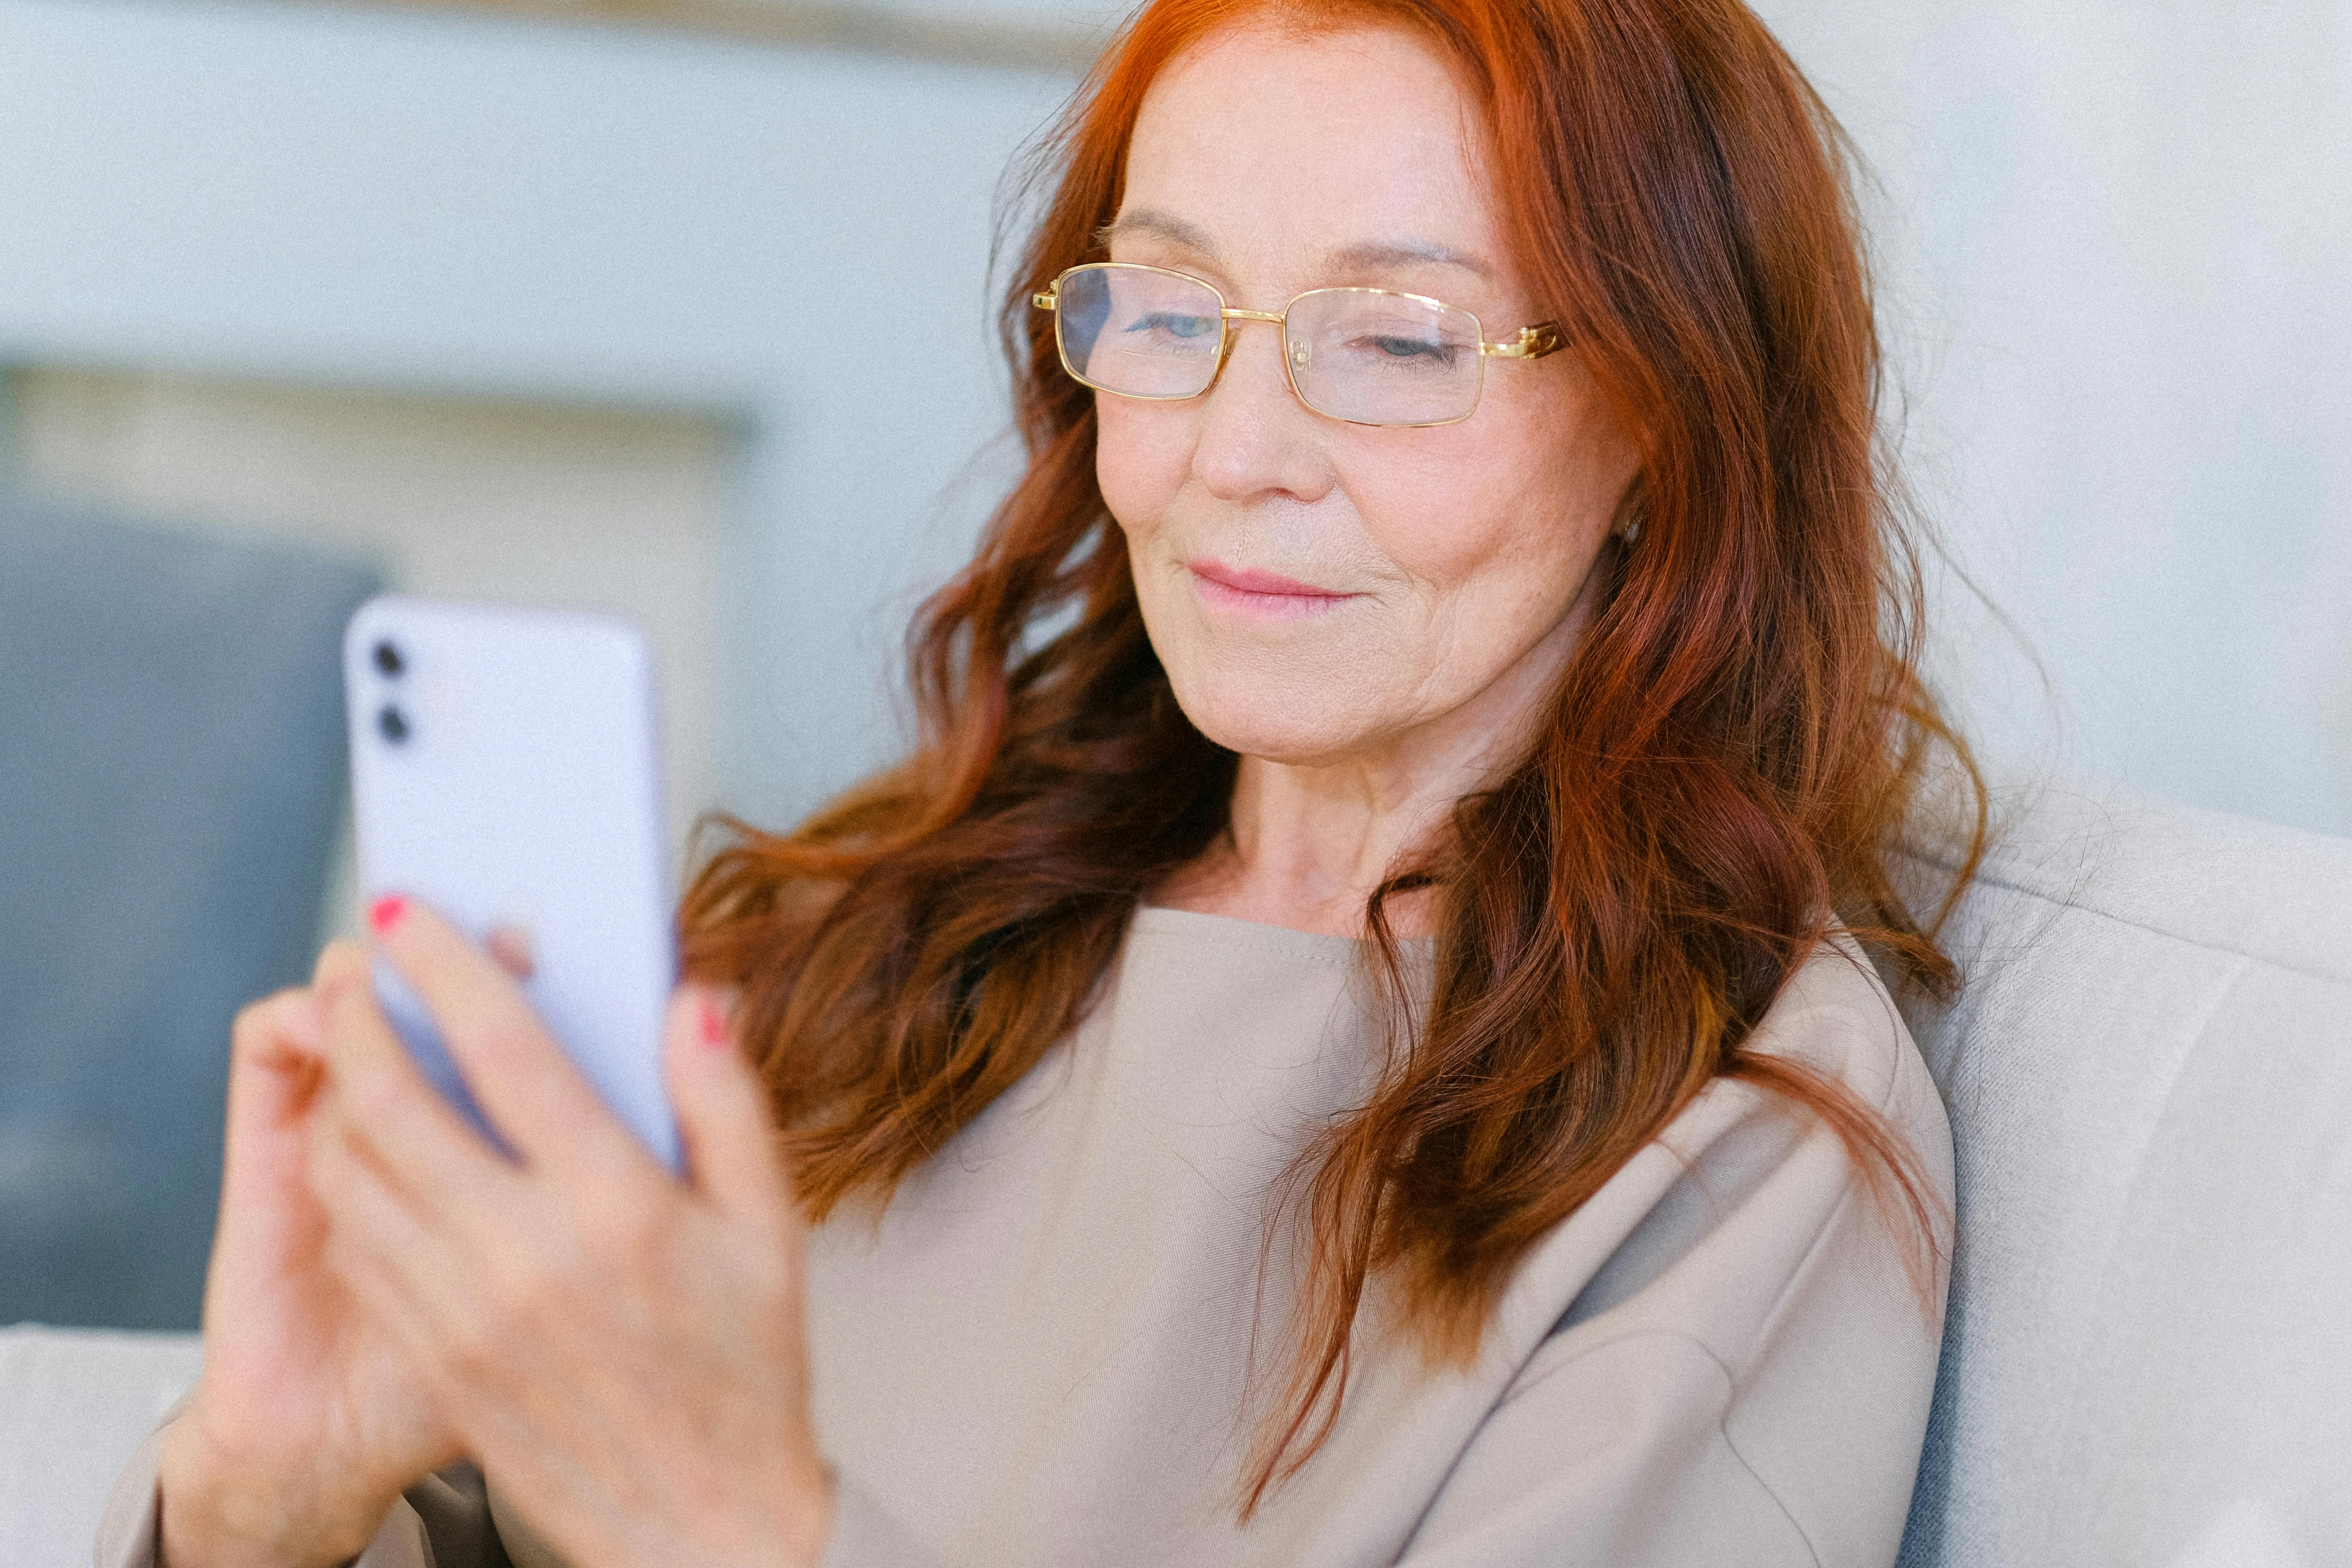 An elderly woman using her phone | Source: Pexels